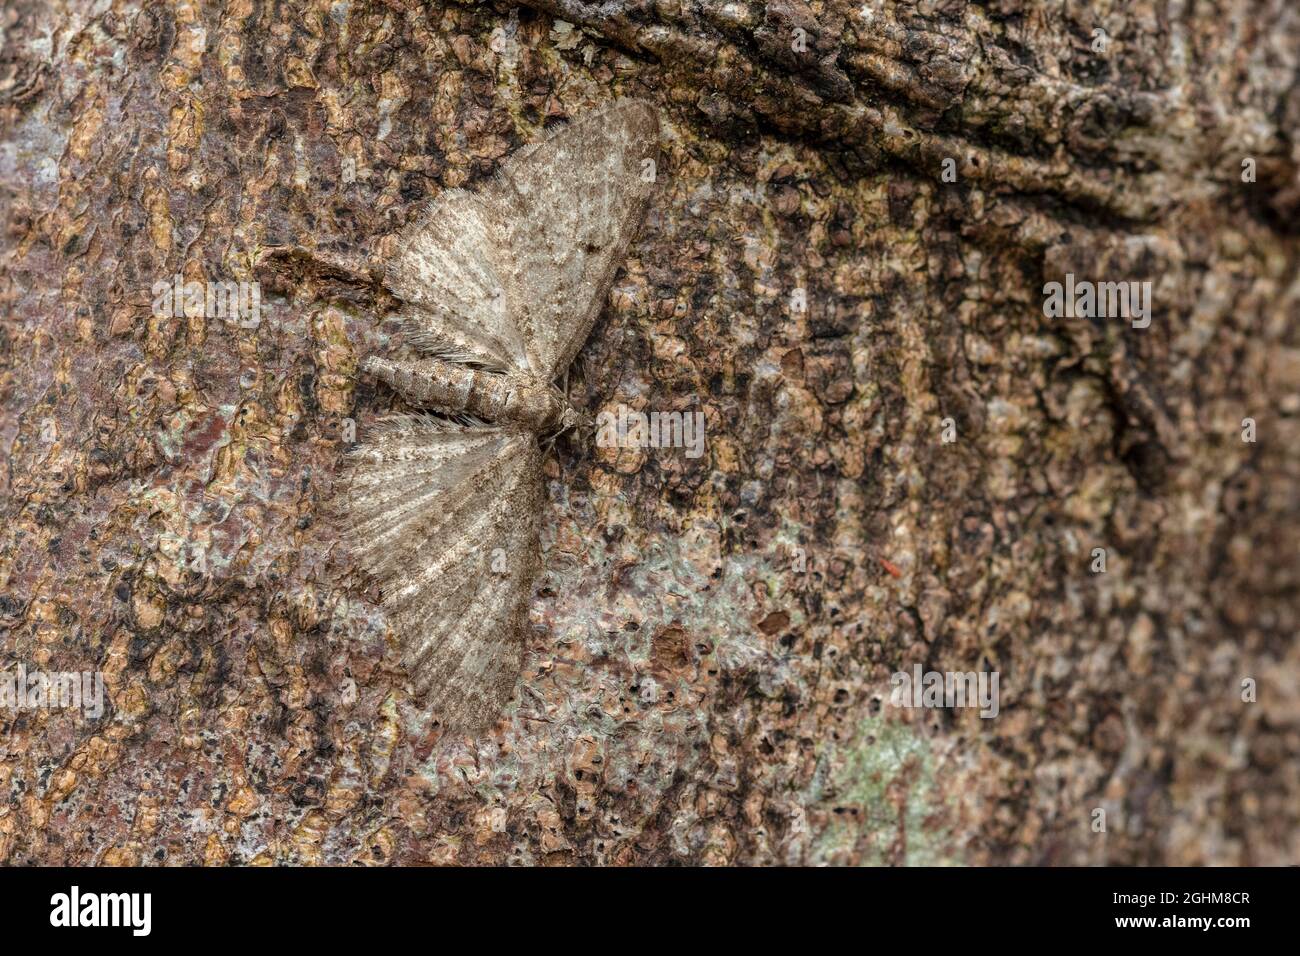 Grauer Pug (Eupithecia subfuscata) auf Baumrinde Stockfoto